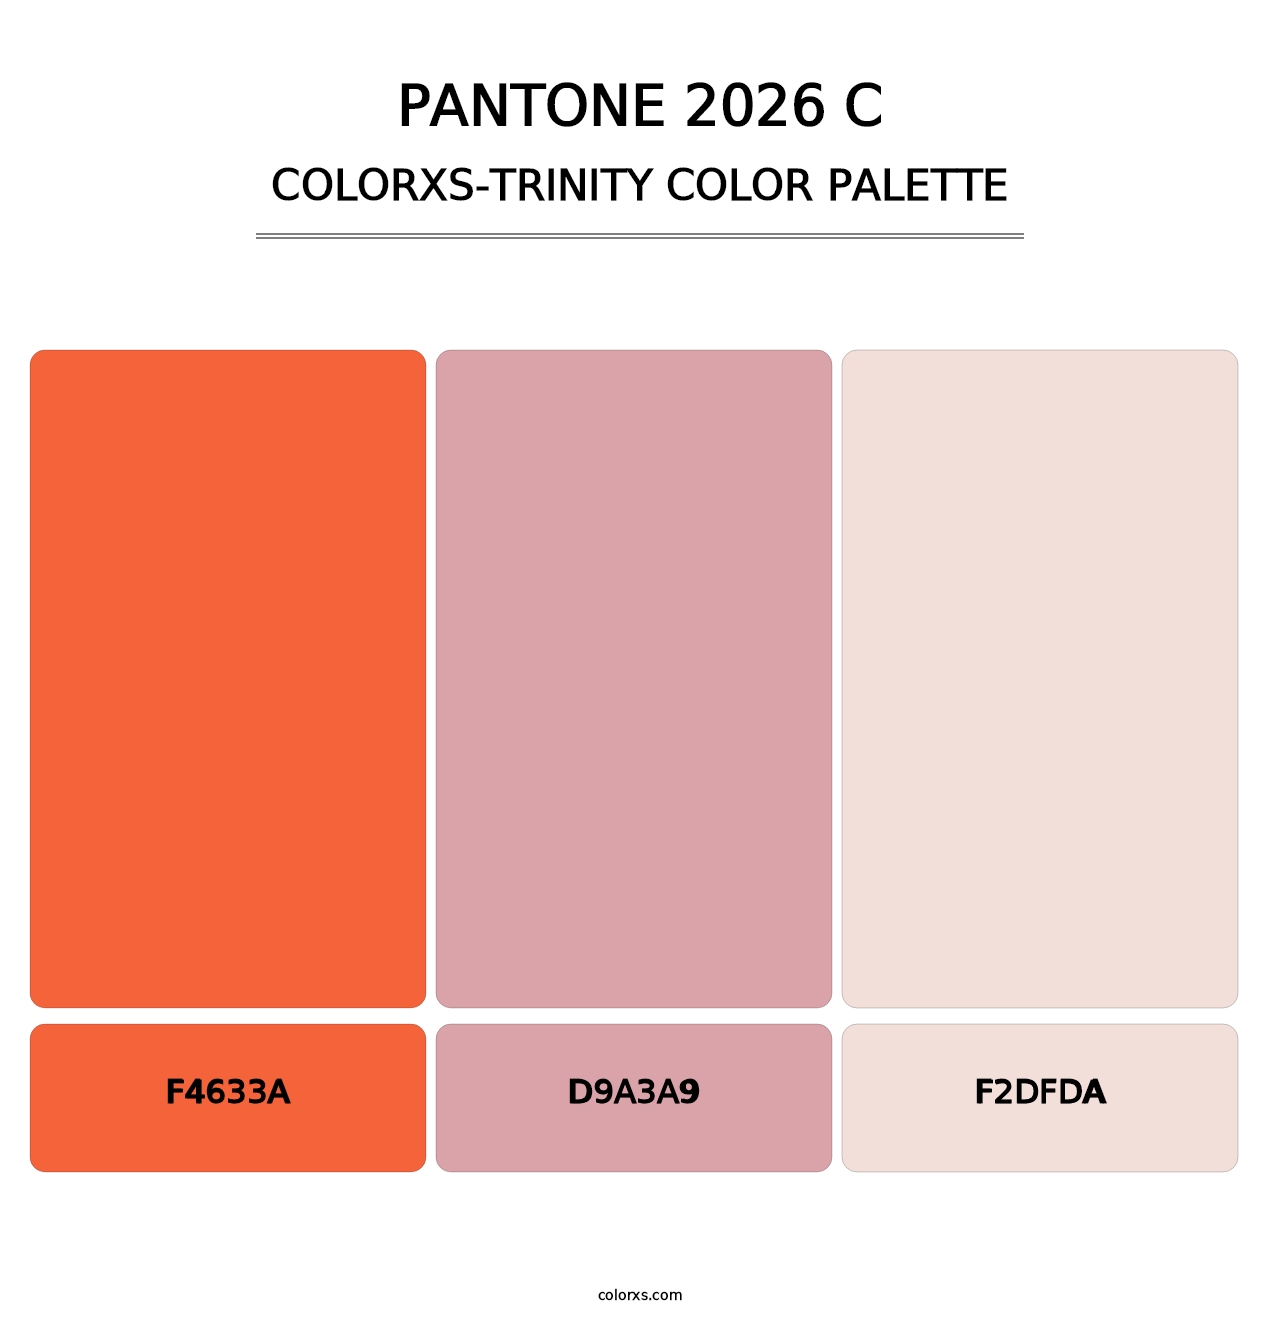 PANTONE 2026 C - Colorxs Trinity Palette